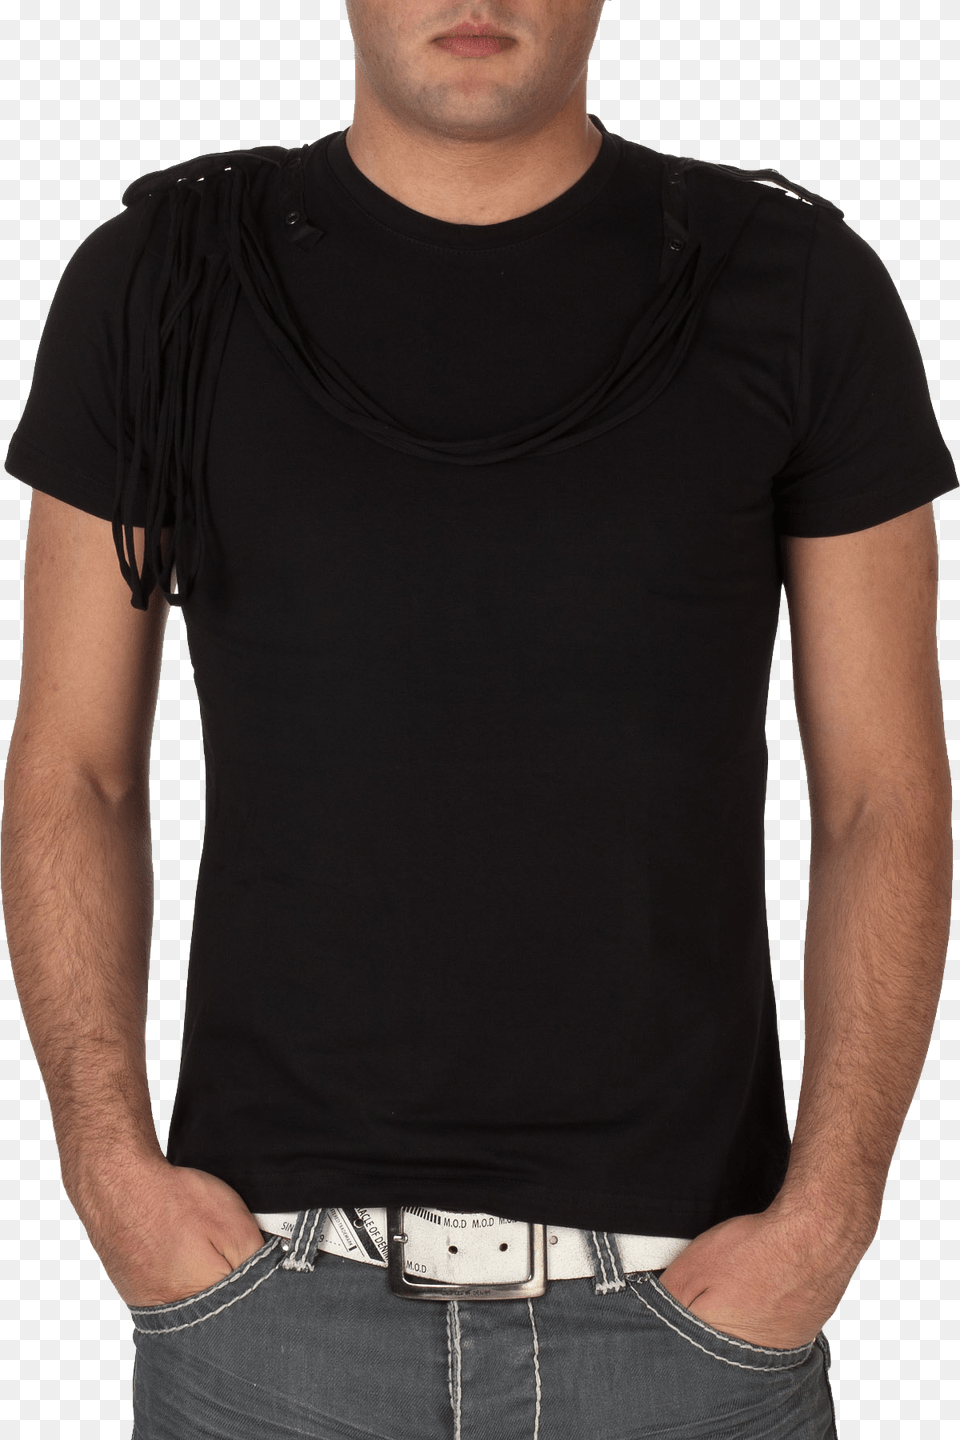 Black Man T Shirt, Clothing, T-shirt, Adult, Male Free Png Download